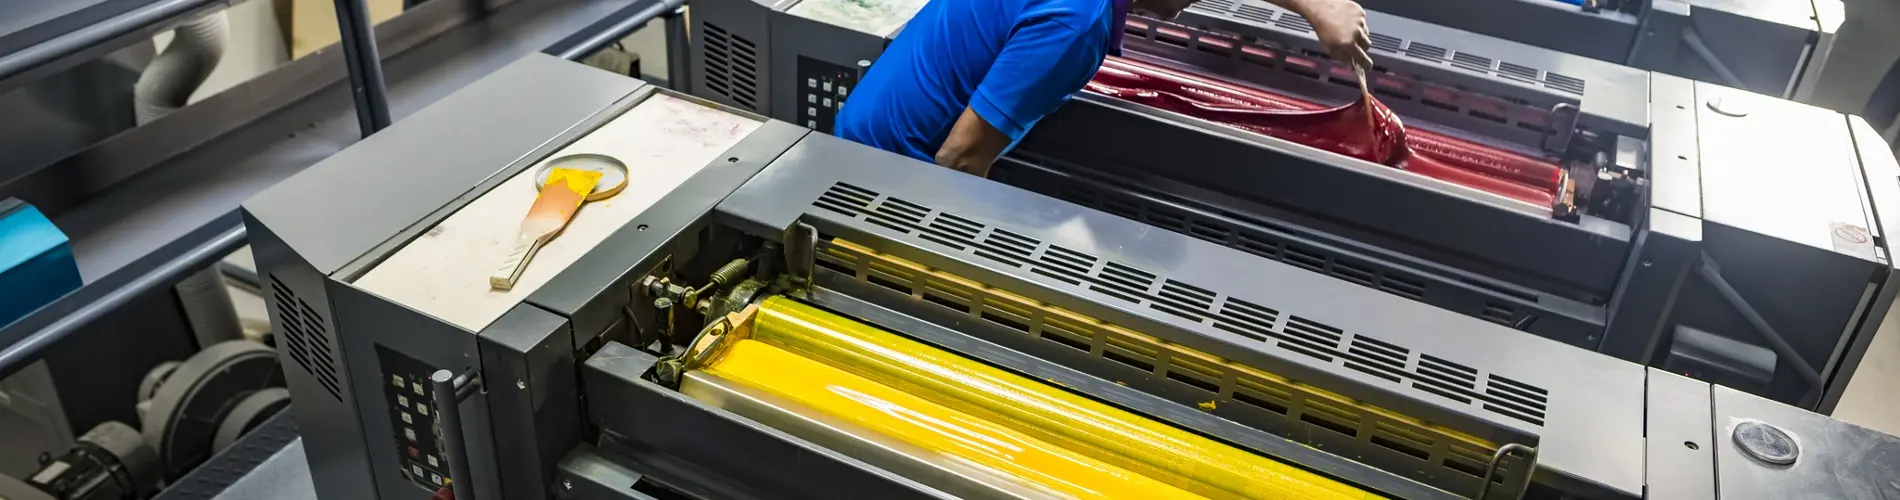 Traditional Printing